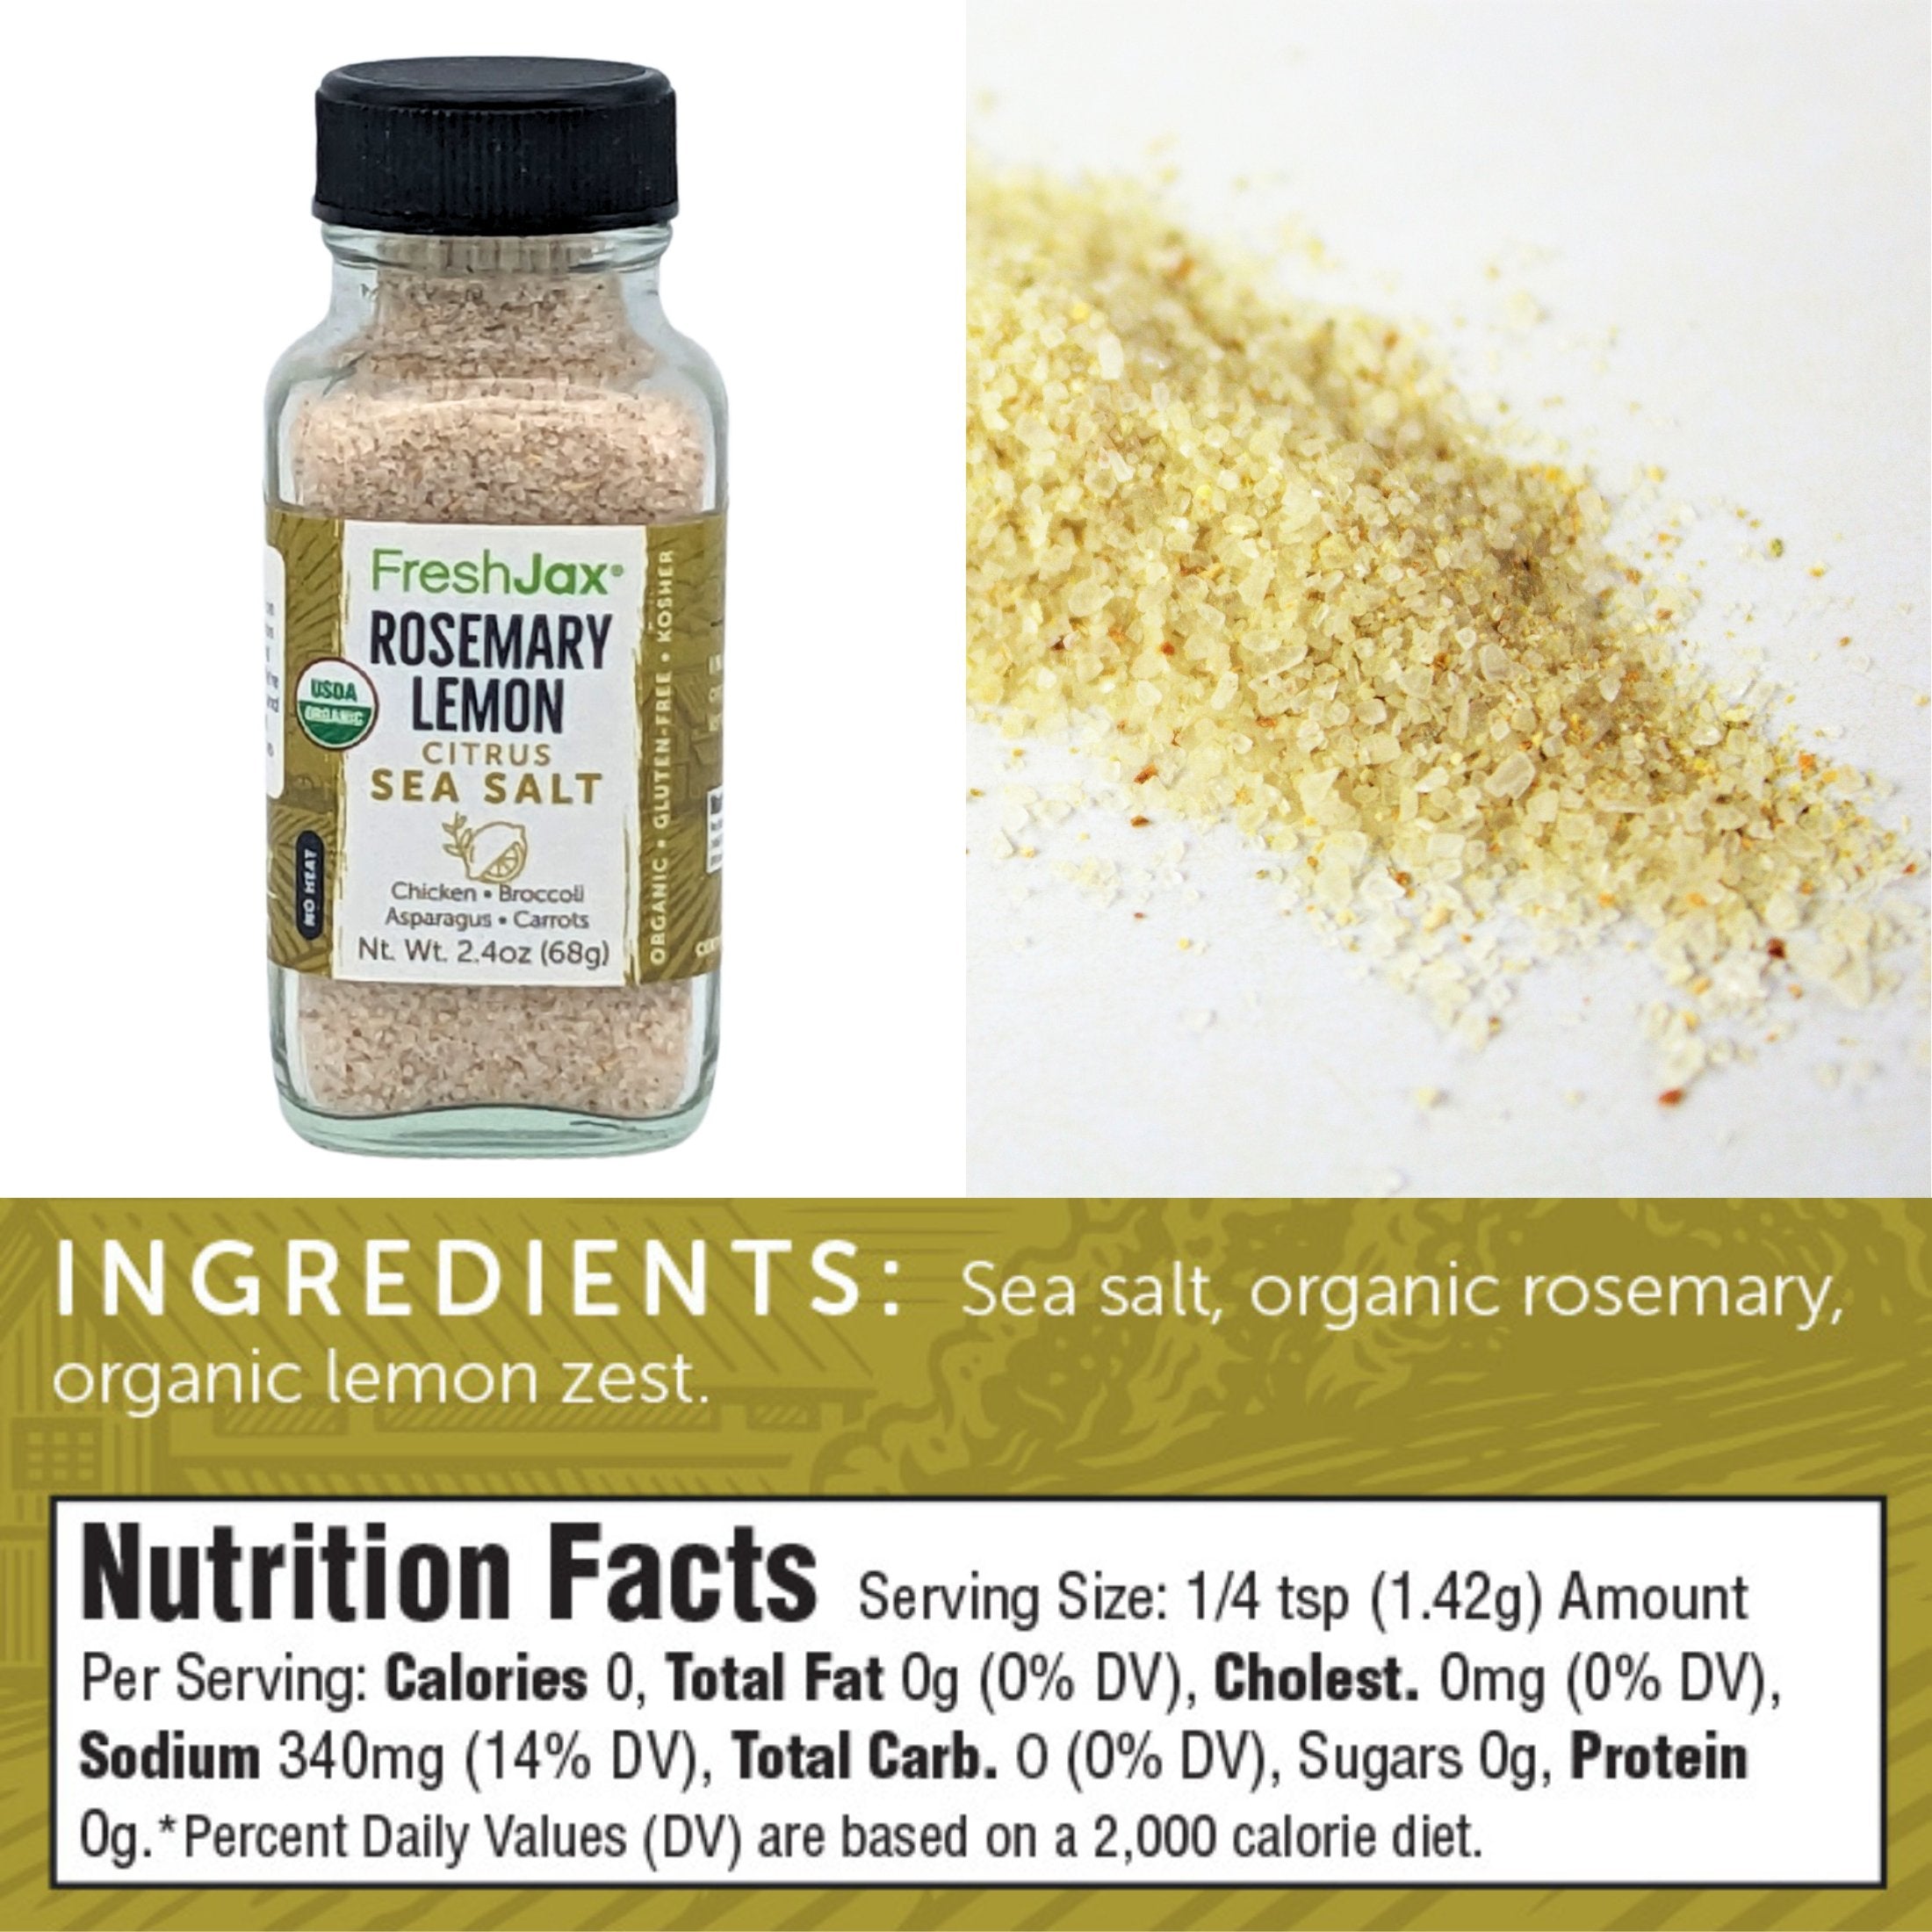 FreshJax Organic Spices Rosemary Lemon Citrus Sea Salt Ingredients and Nutritional Information